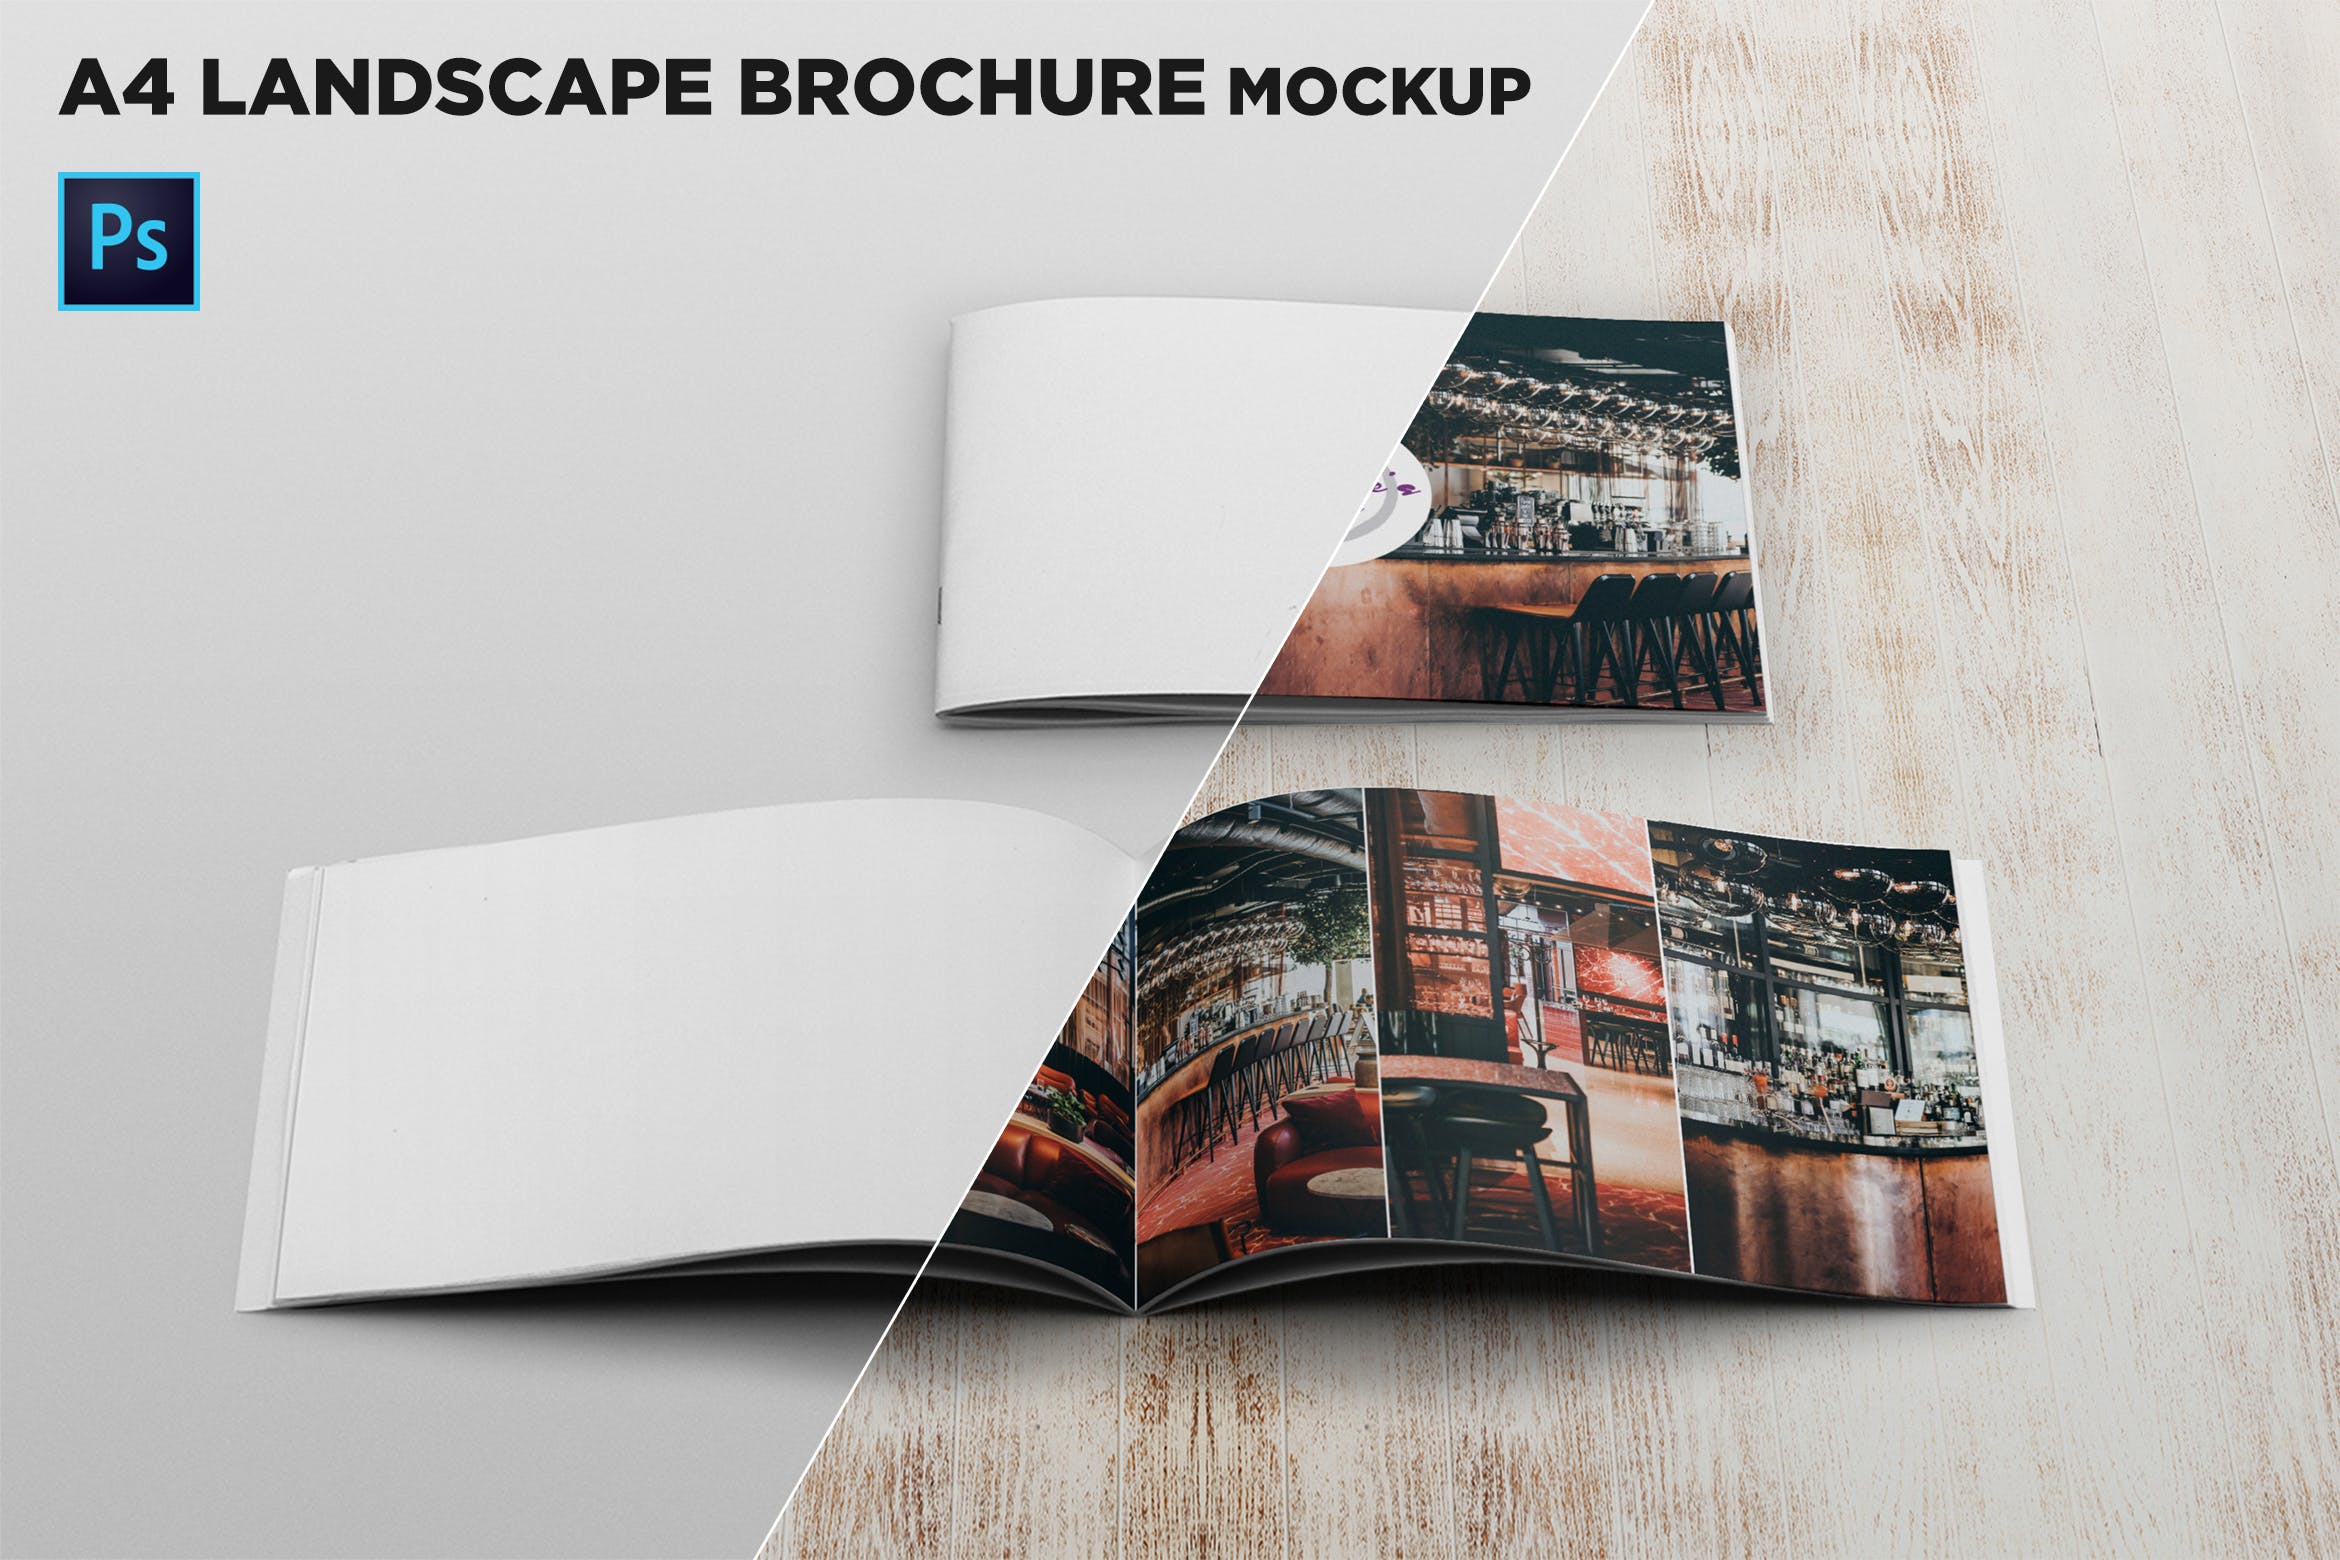 企业画册产品手册封面&内页版式设计正视图样机大洋岛精选 Cover & Open Landscape Brochure Mockup Front View插图